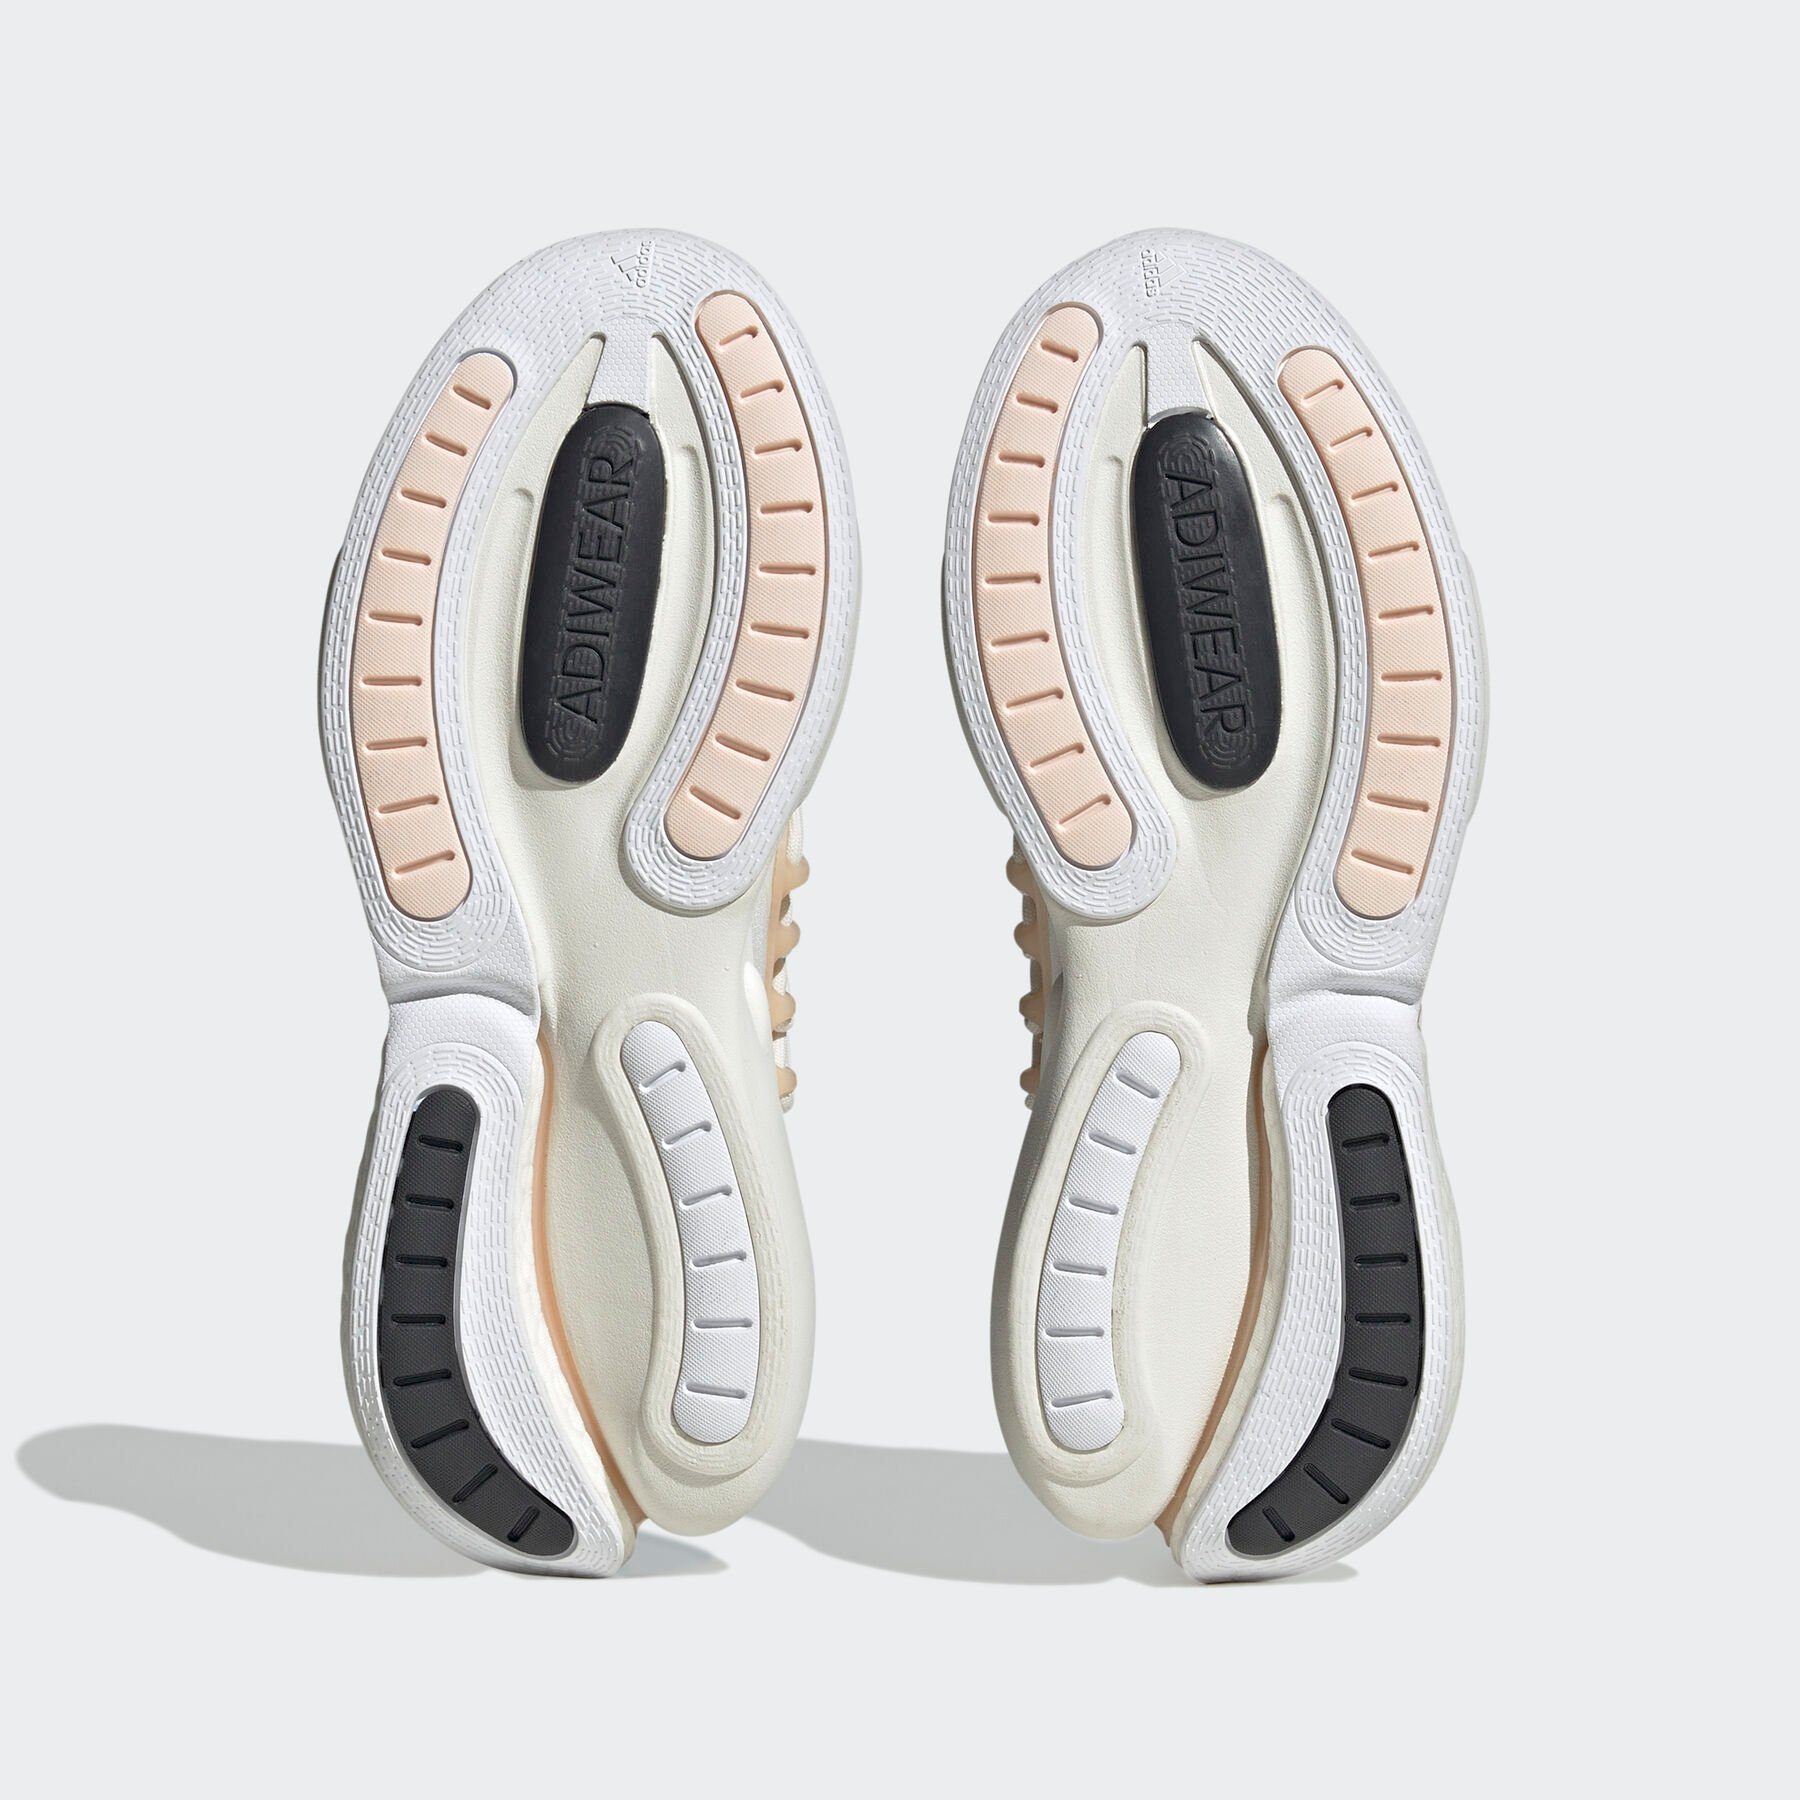 / Sportswear ALPHABOOST Wonder Quartz White / Sneaker Cloud Five adidas Grey V1